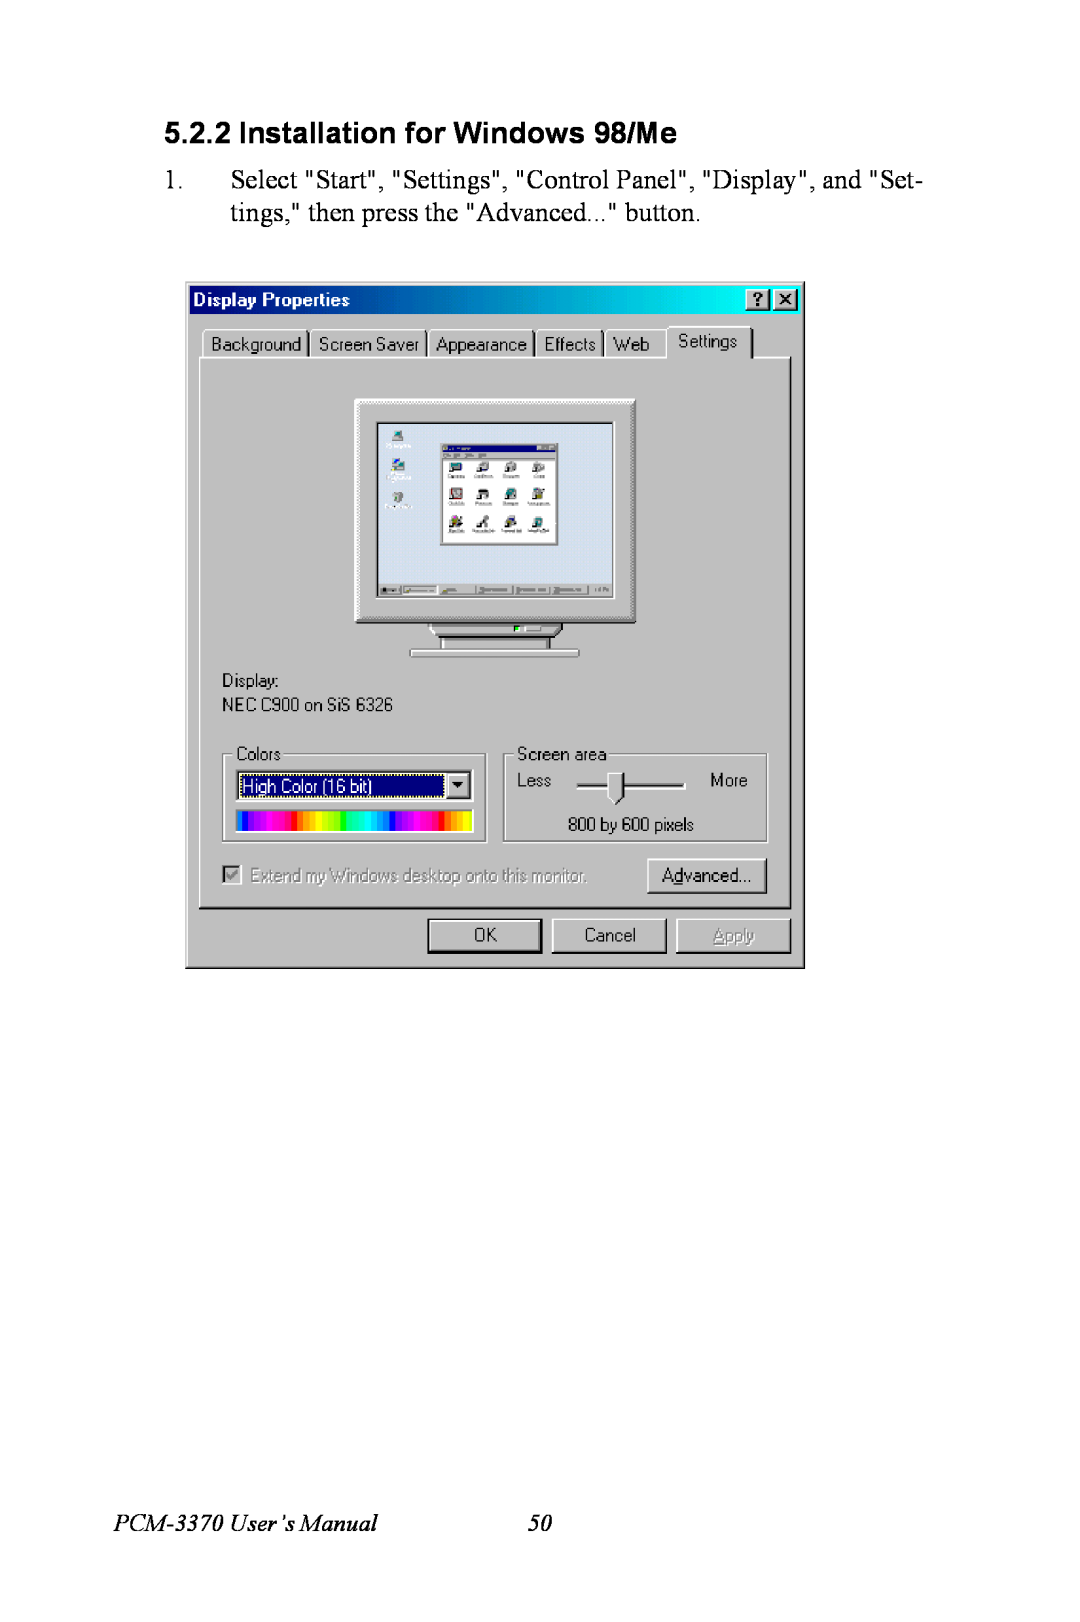 Intel user manual Installation for Windows 98/Me, PCM-3370 User’s Manual 